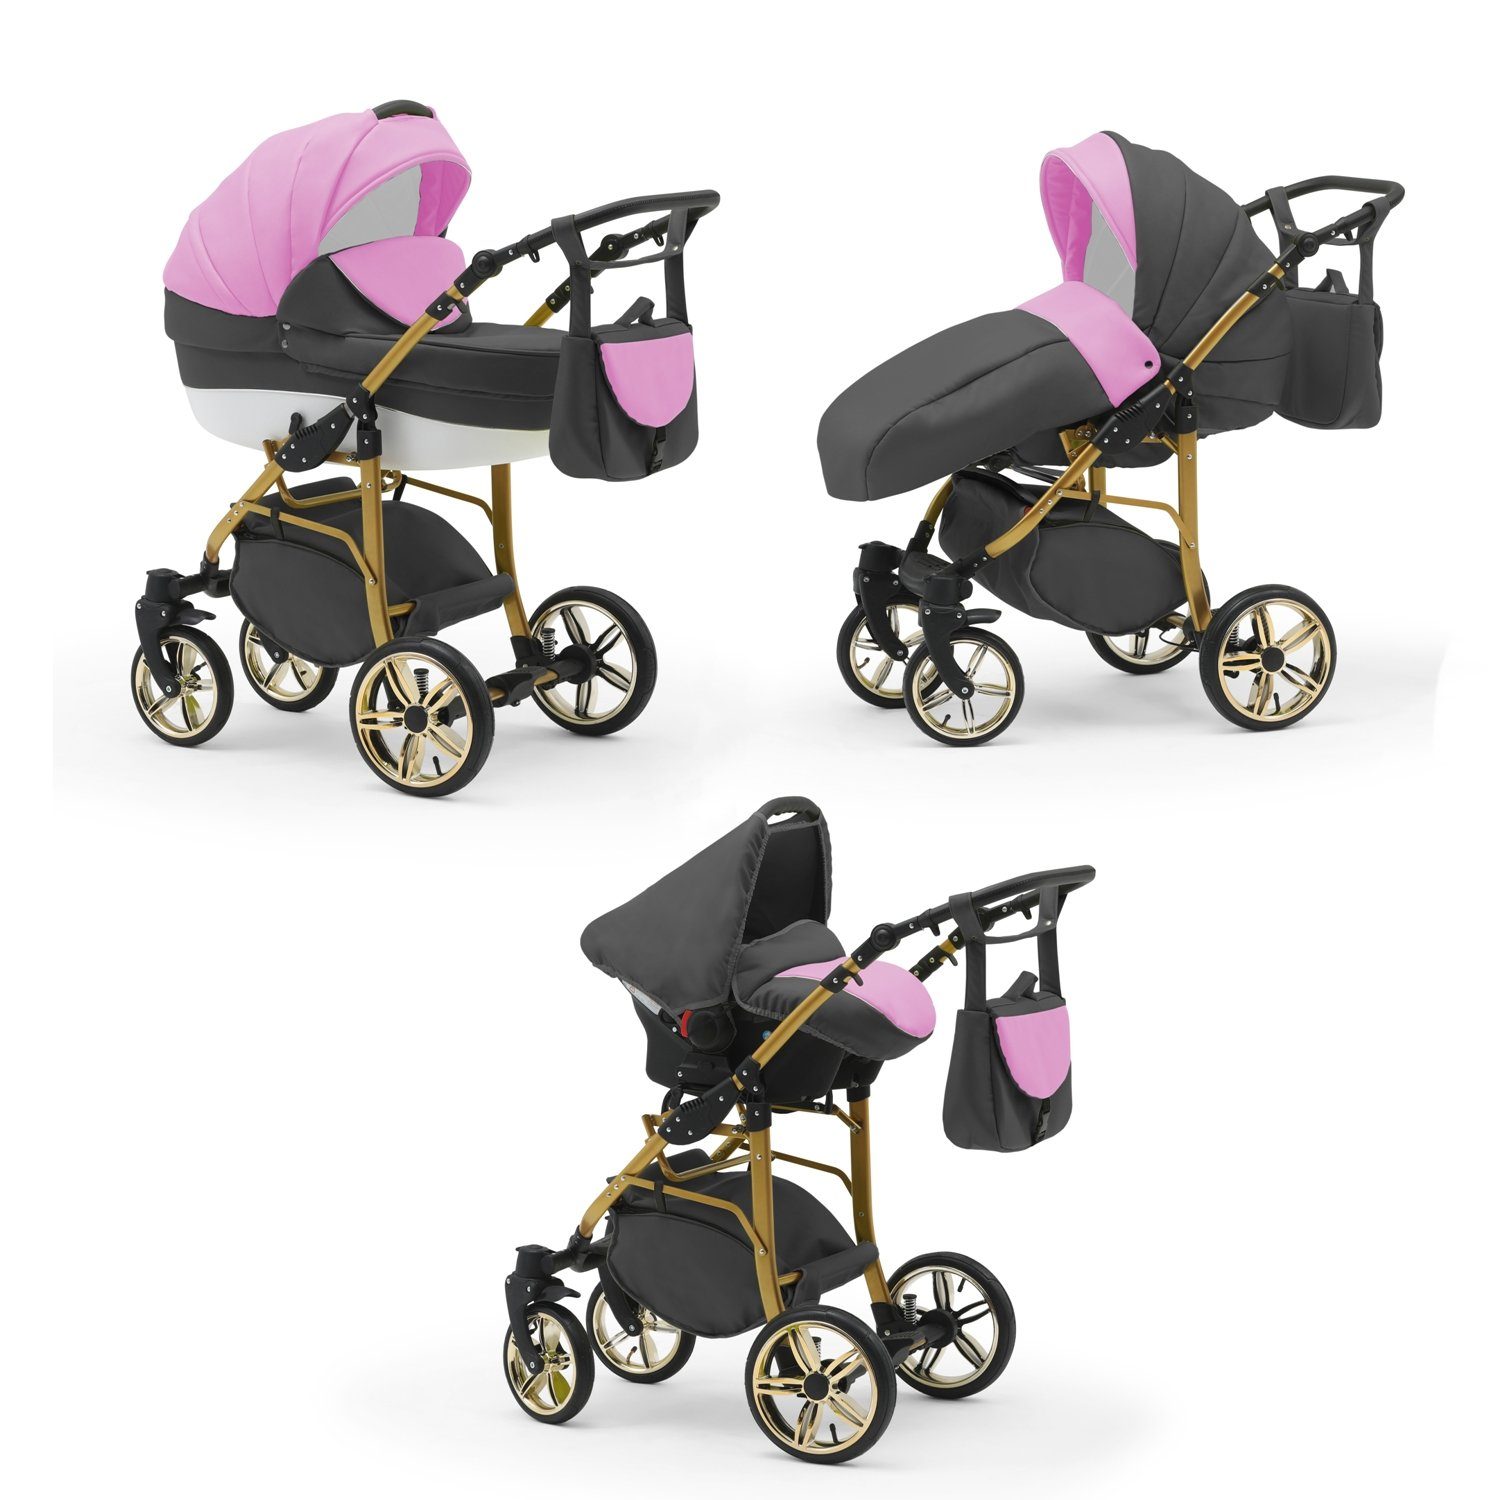 Farben Teile in 1 in - babies-on-wheels Gold- Pink-Weiß-Grau Kombi-Kinderwagen 3 Cosmo Kinderwagen-Set 46 16